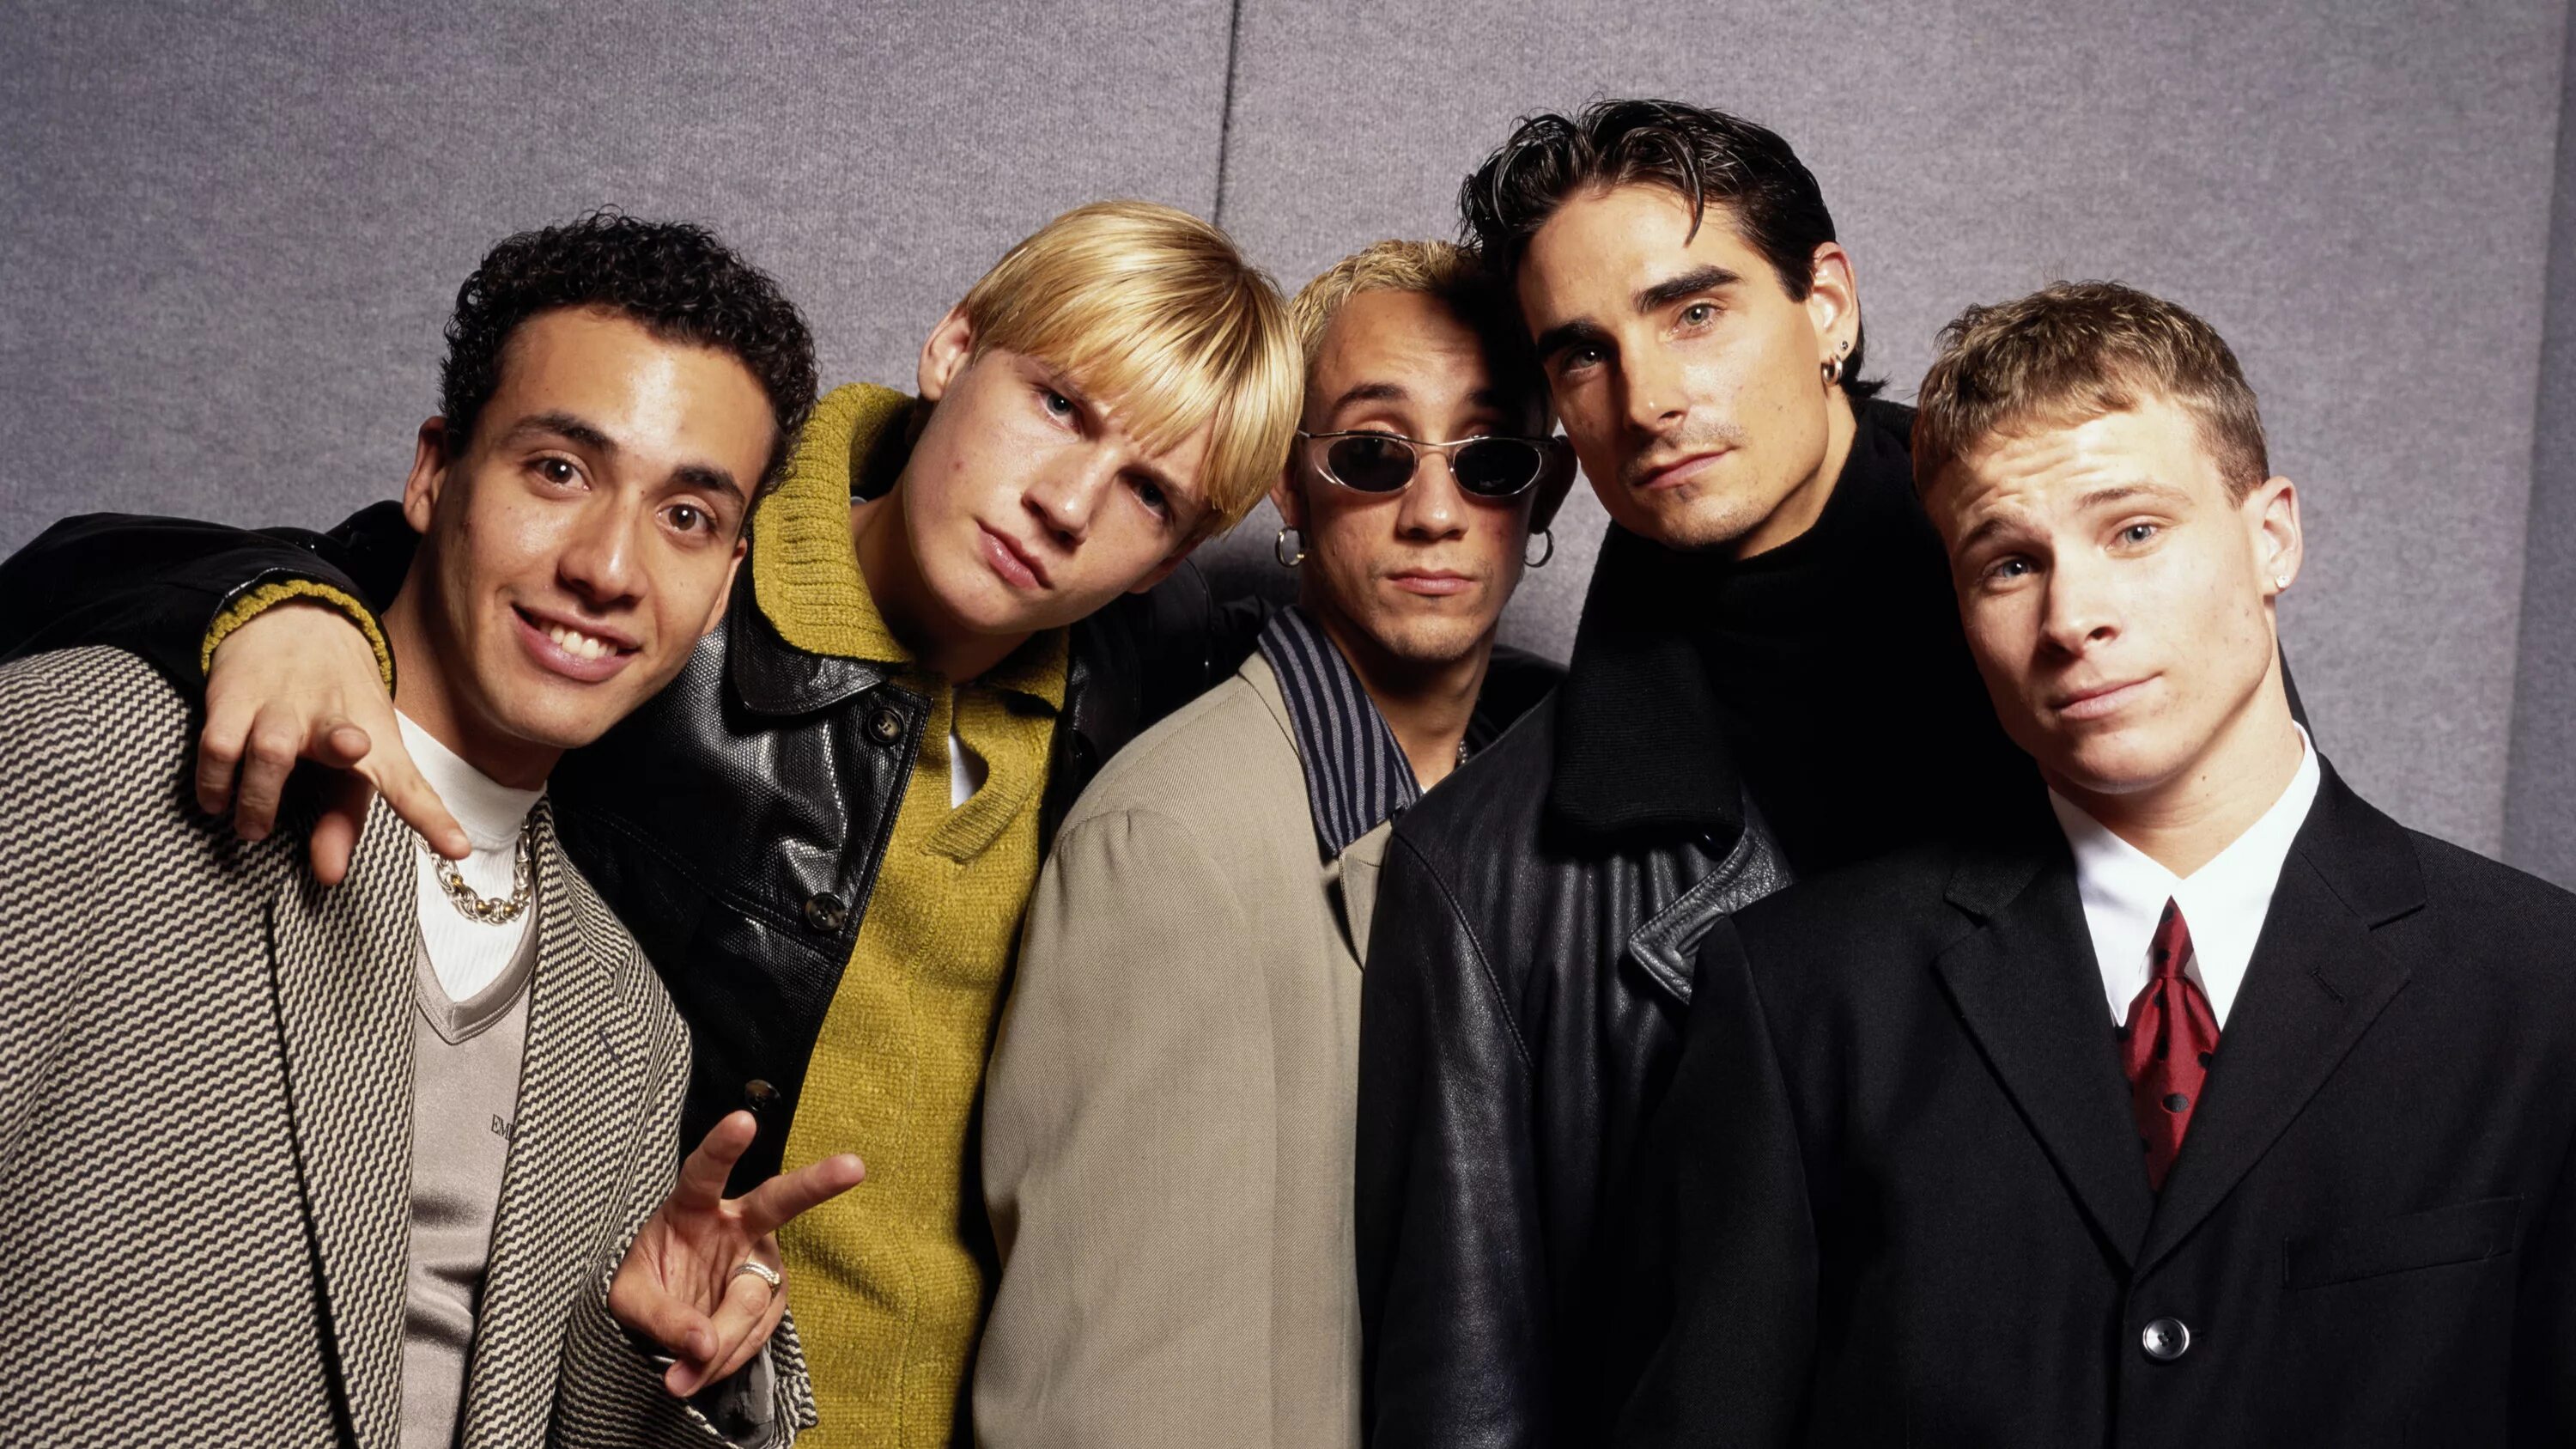 Группа Backstreet boys. Backstreet boys 1993. Backstreet boys 2000. Backstreet boys состав группы.